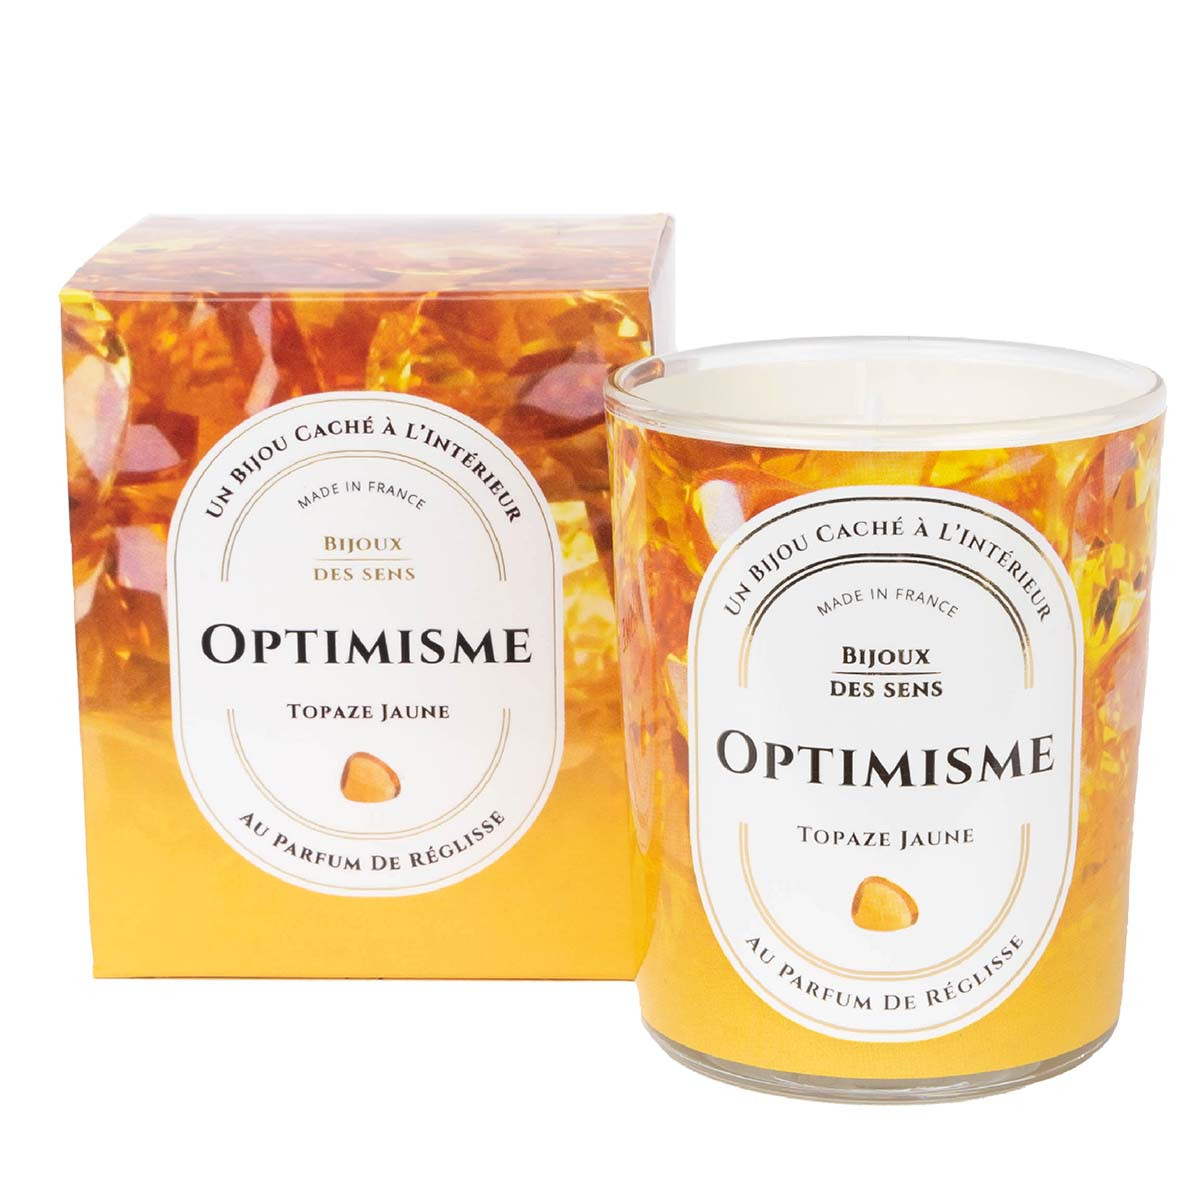 Optimisme - Bougie Fragrance Reglisse et Bracelet Doré Topaze Jaune